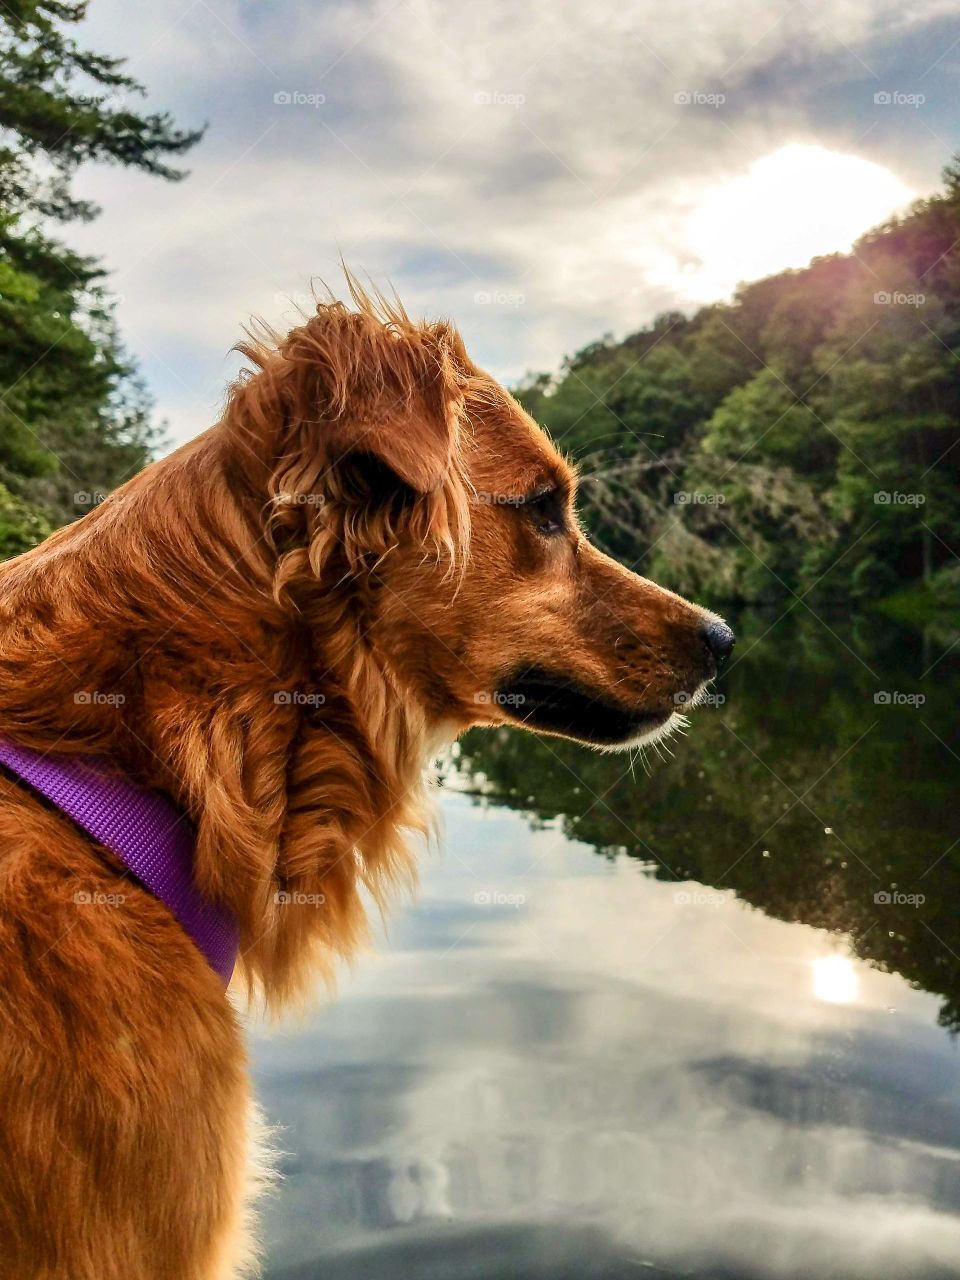 Golden Retriever enjoying a day at the lake.